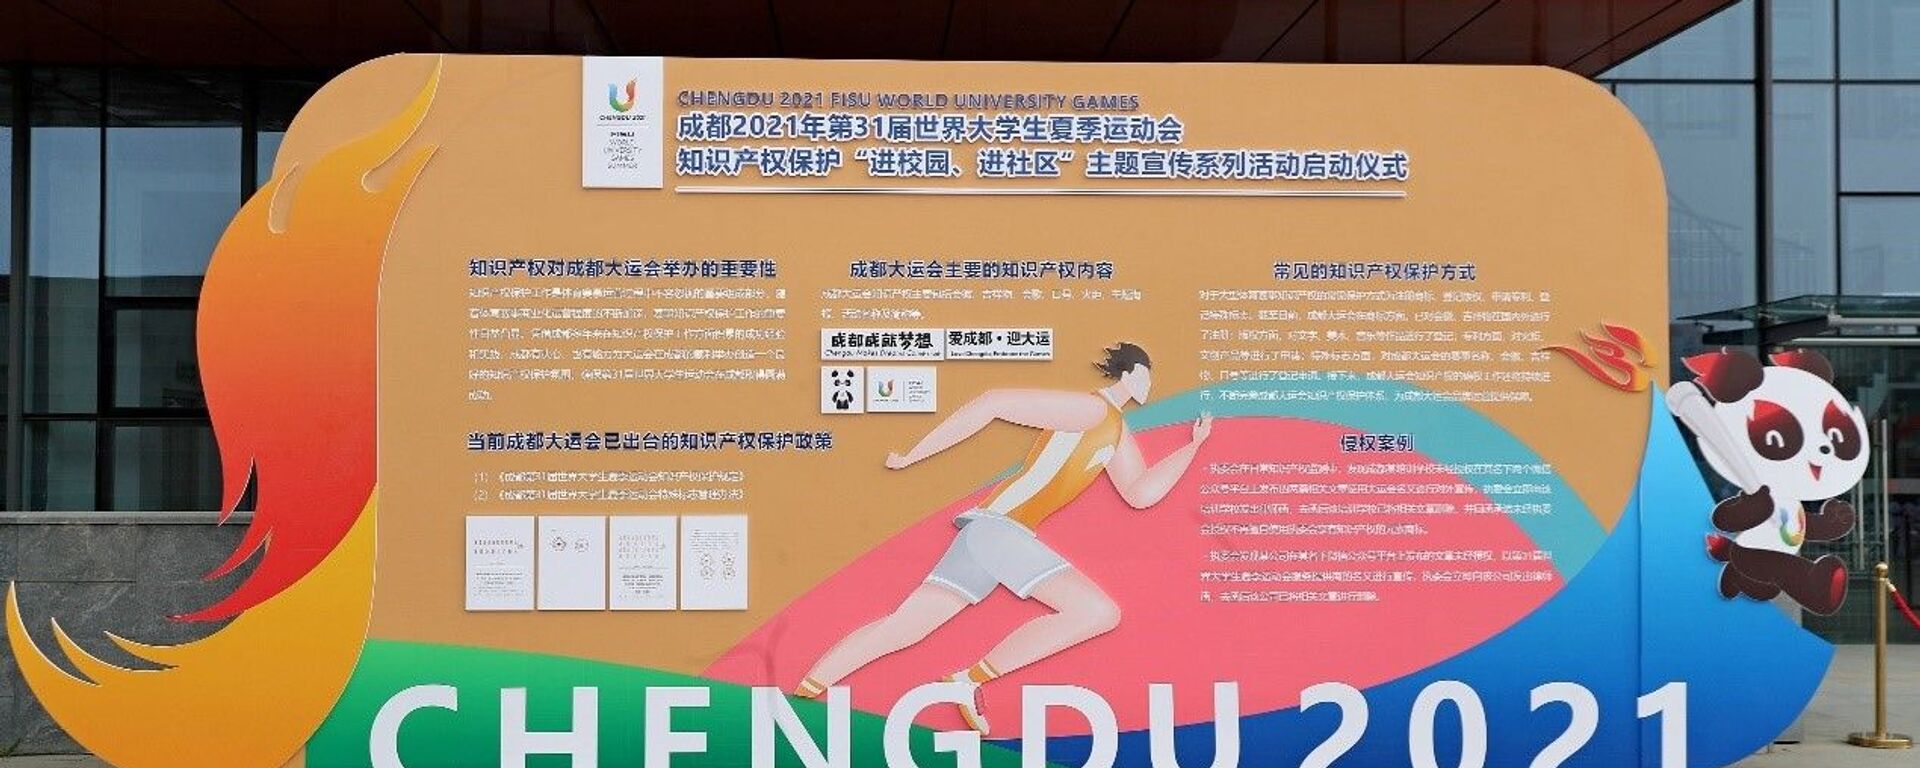 Chengdu 2021 31st Summer Universiade - 俄羅斯衛星通訊社, 1920, 25.06.2022